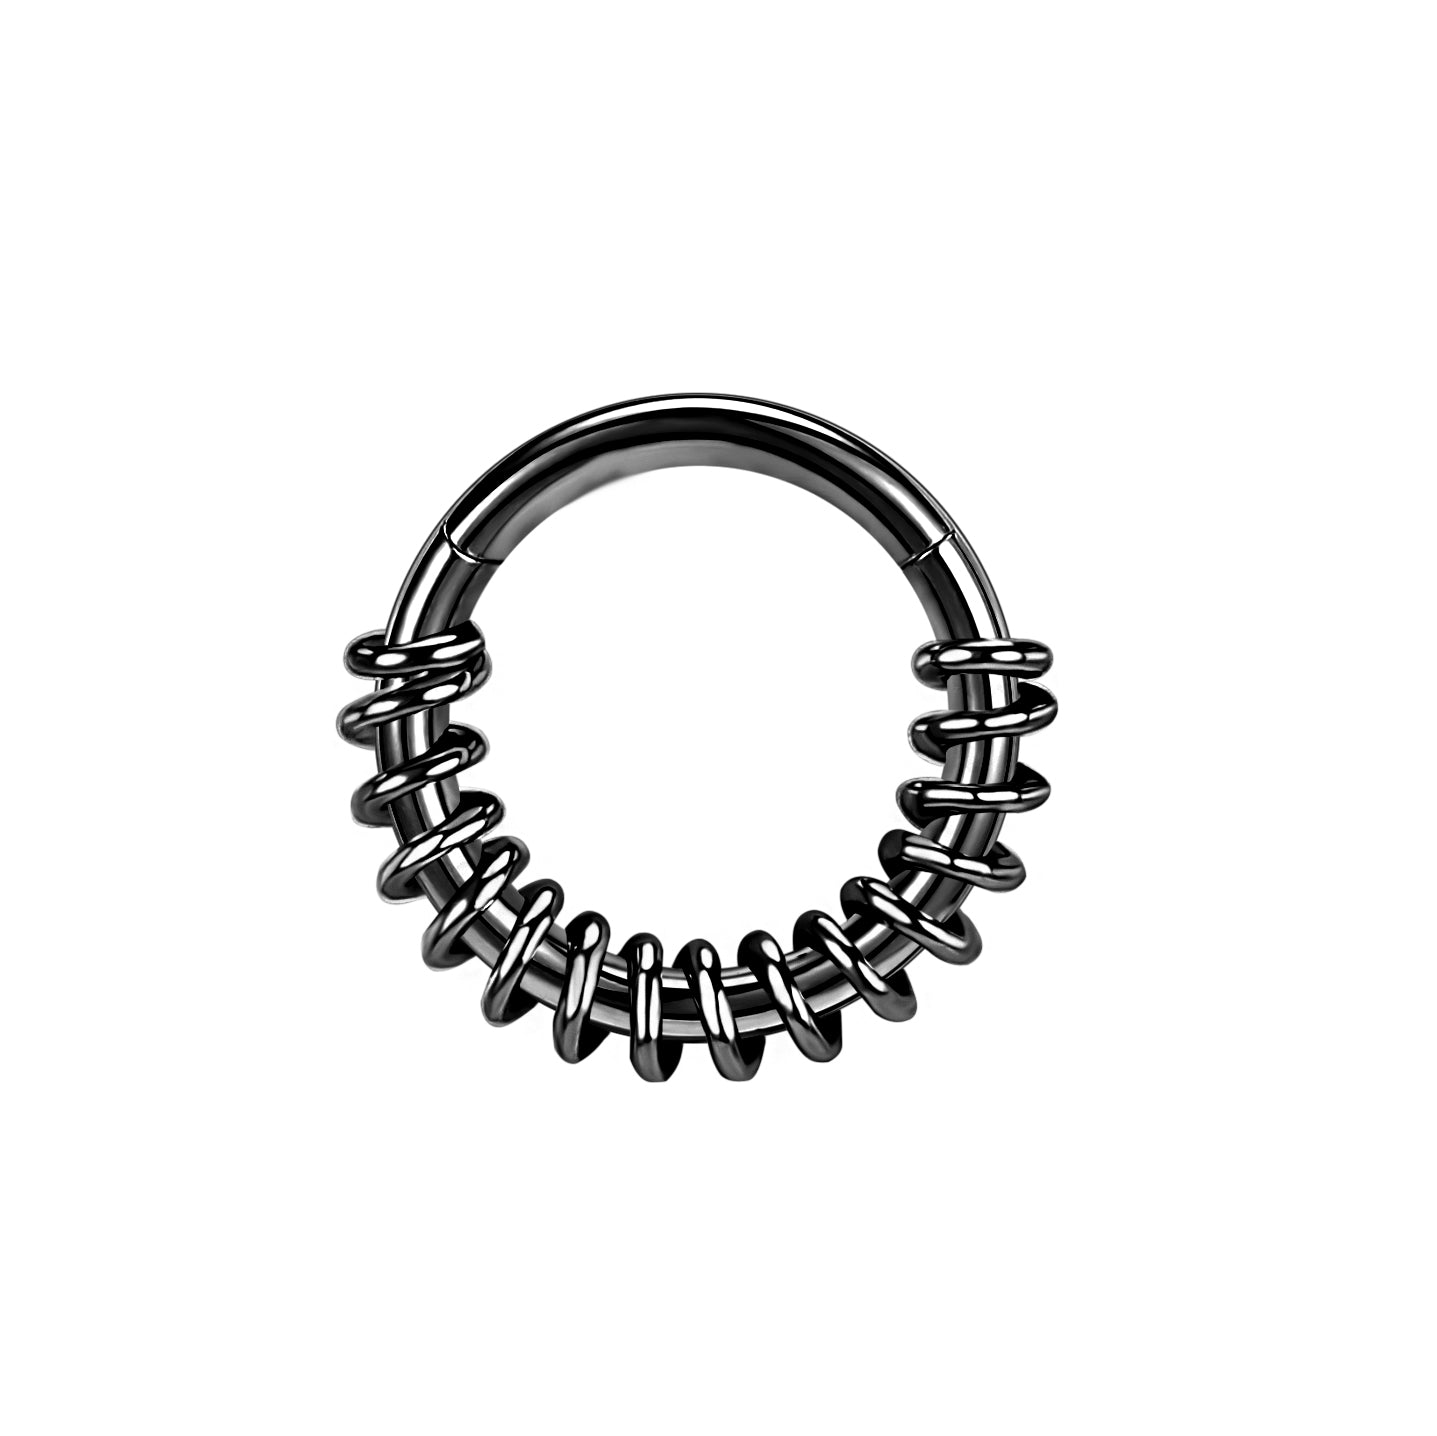 16g-spring-roll-nose-septum-ring-black-sliver-clicker-stainless-steel-helix-cartilage-piercing